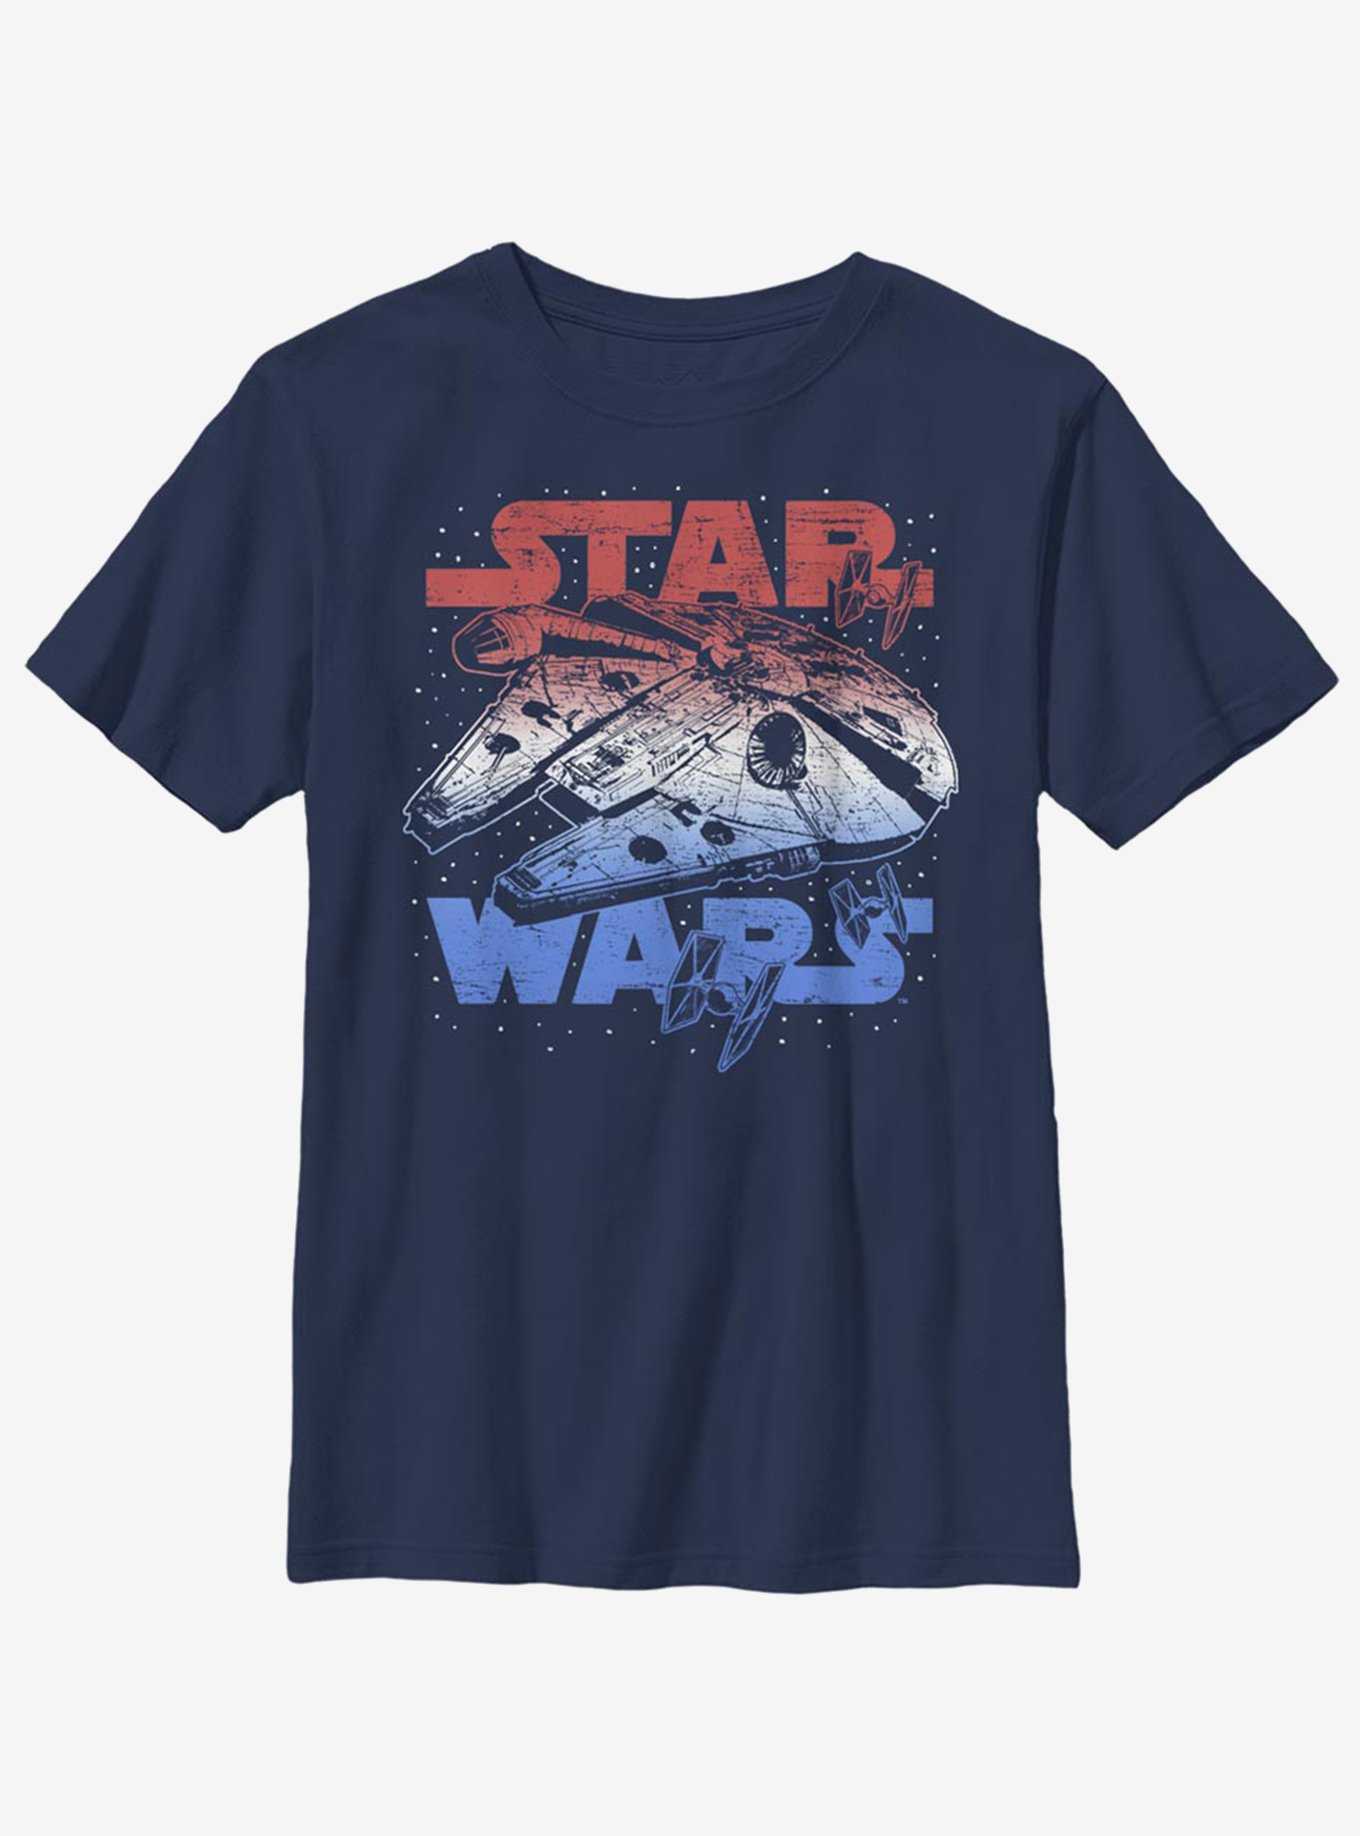 Star Wars Star Spangled Falcon Youth T-Shirt, , hi-res